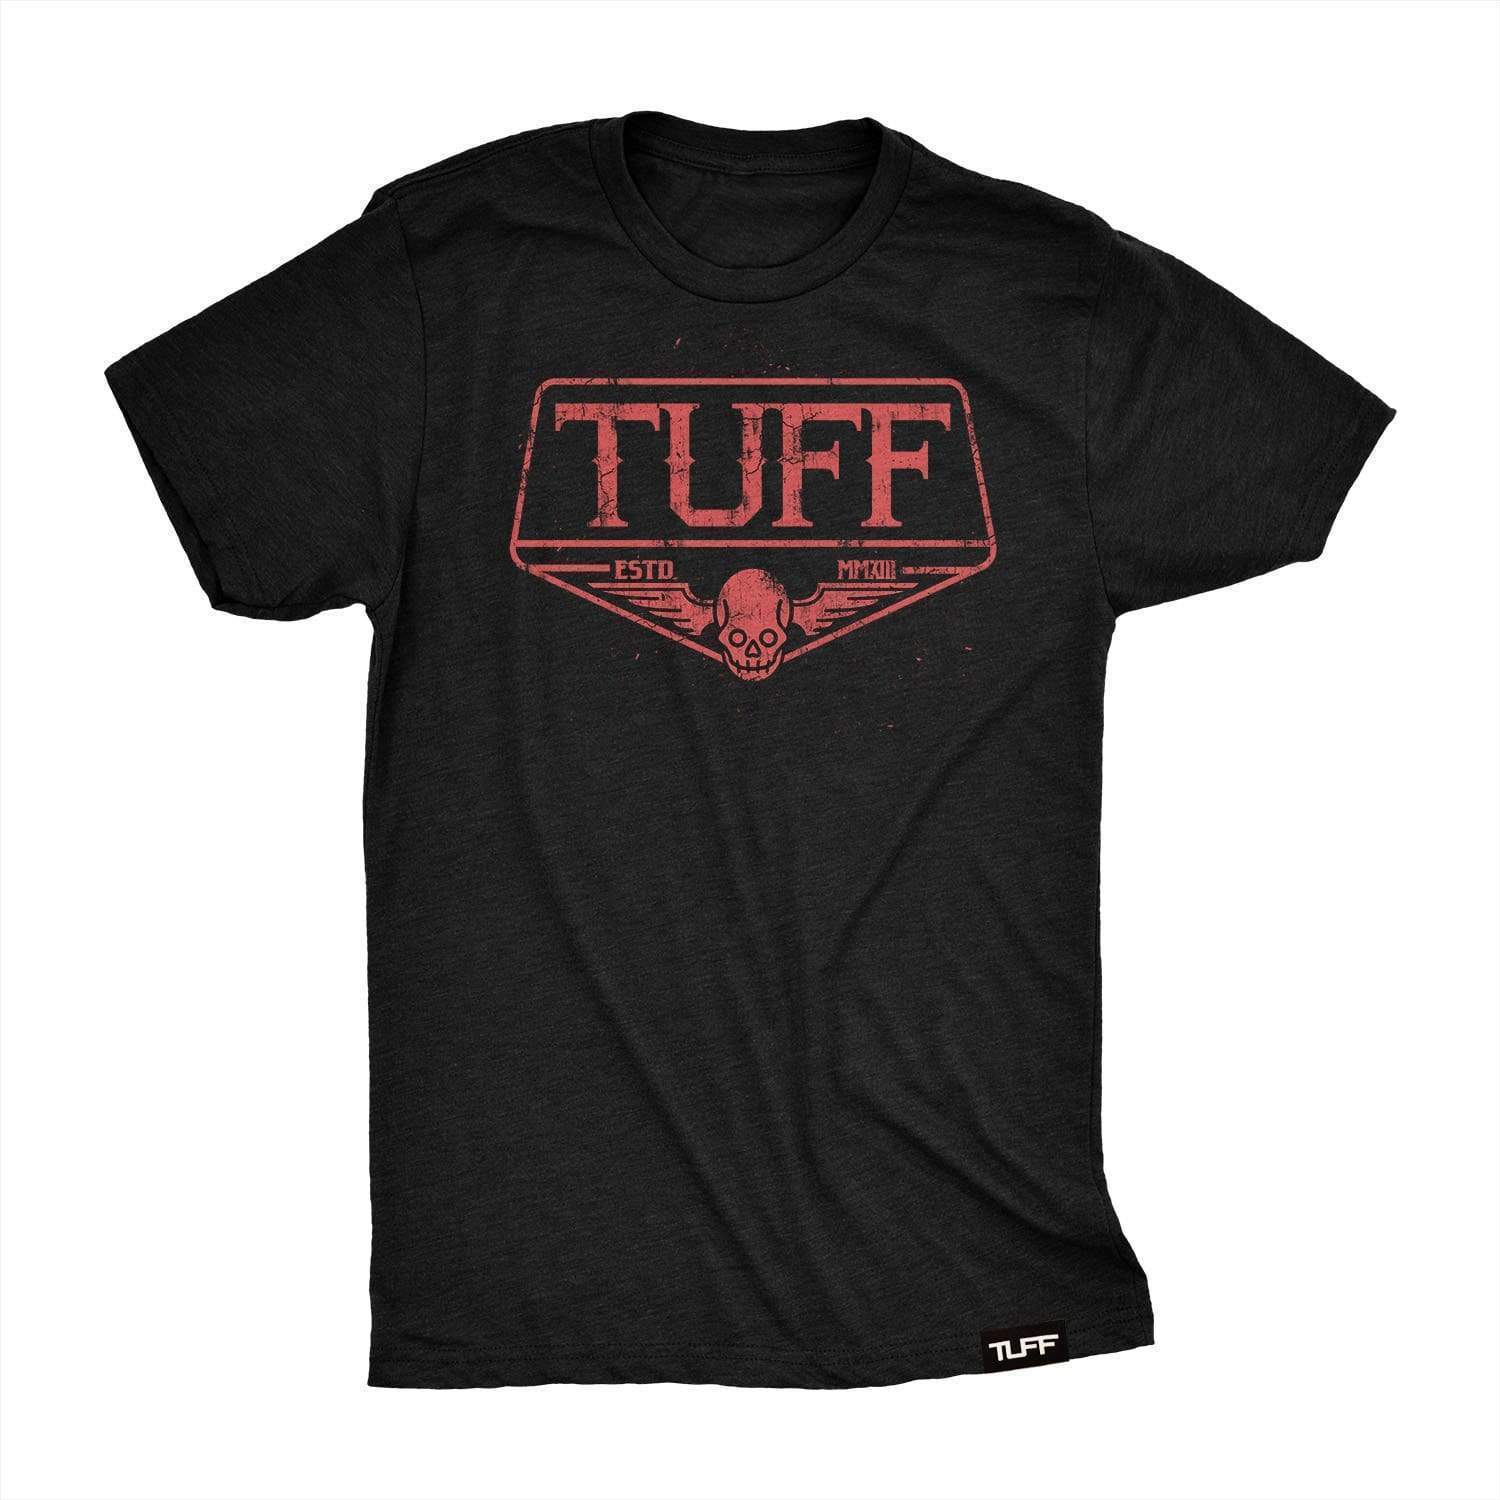 TUFF Skull Wings Tee S / Black w/Red TuffWraps.com